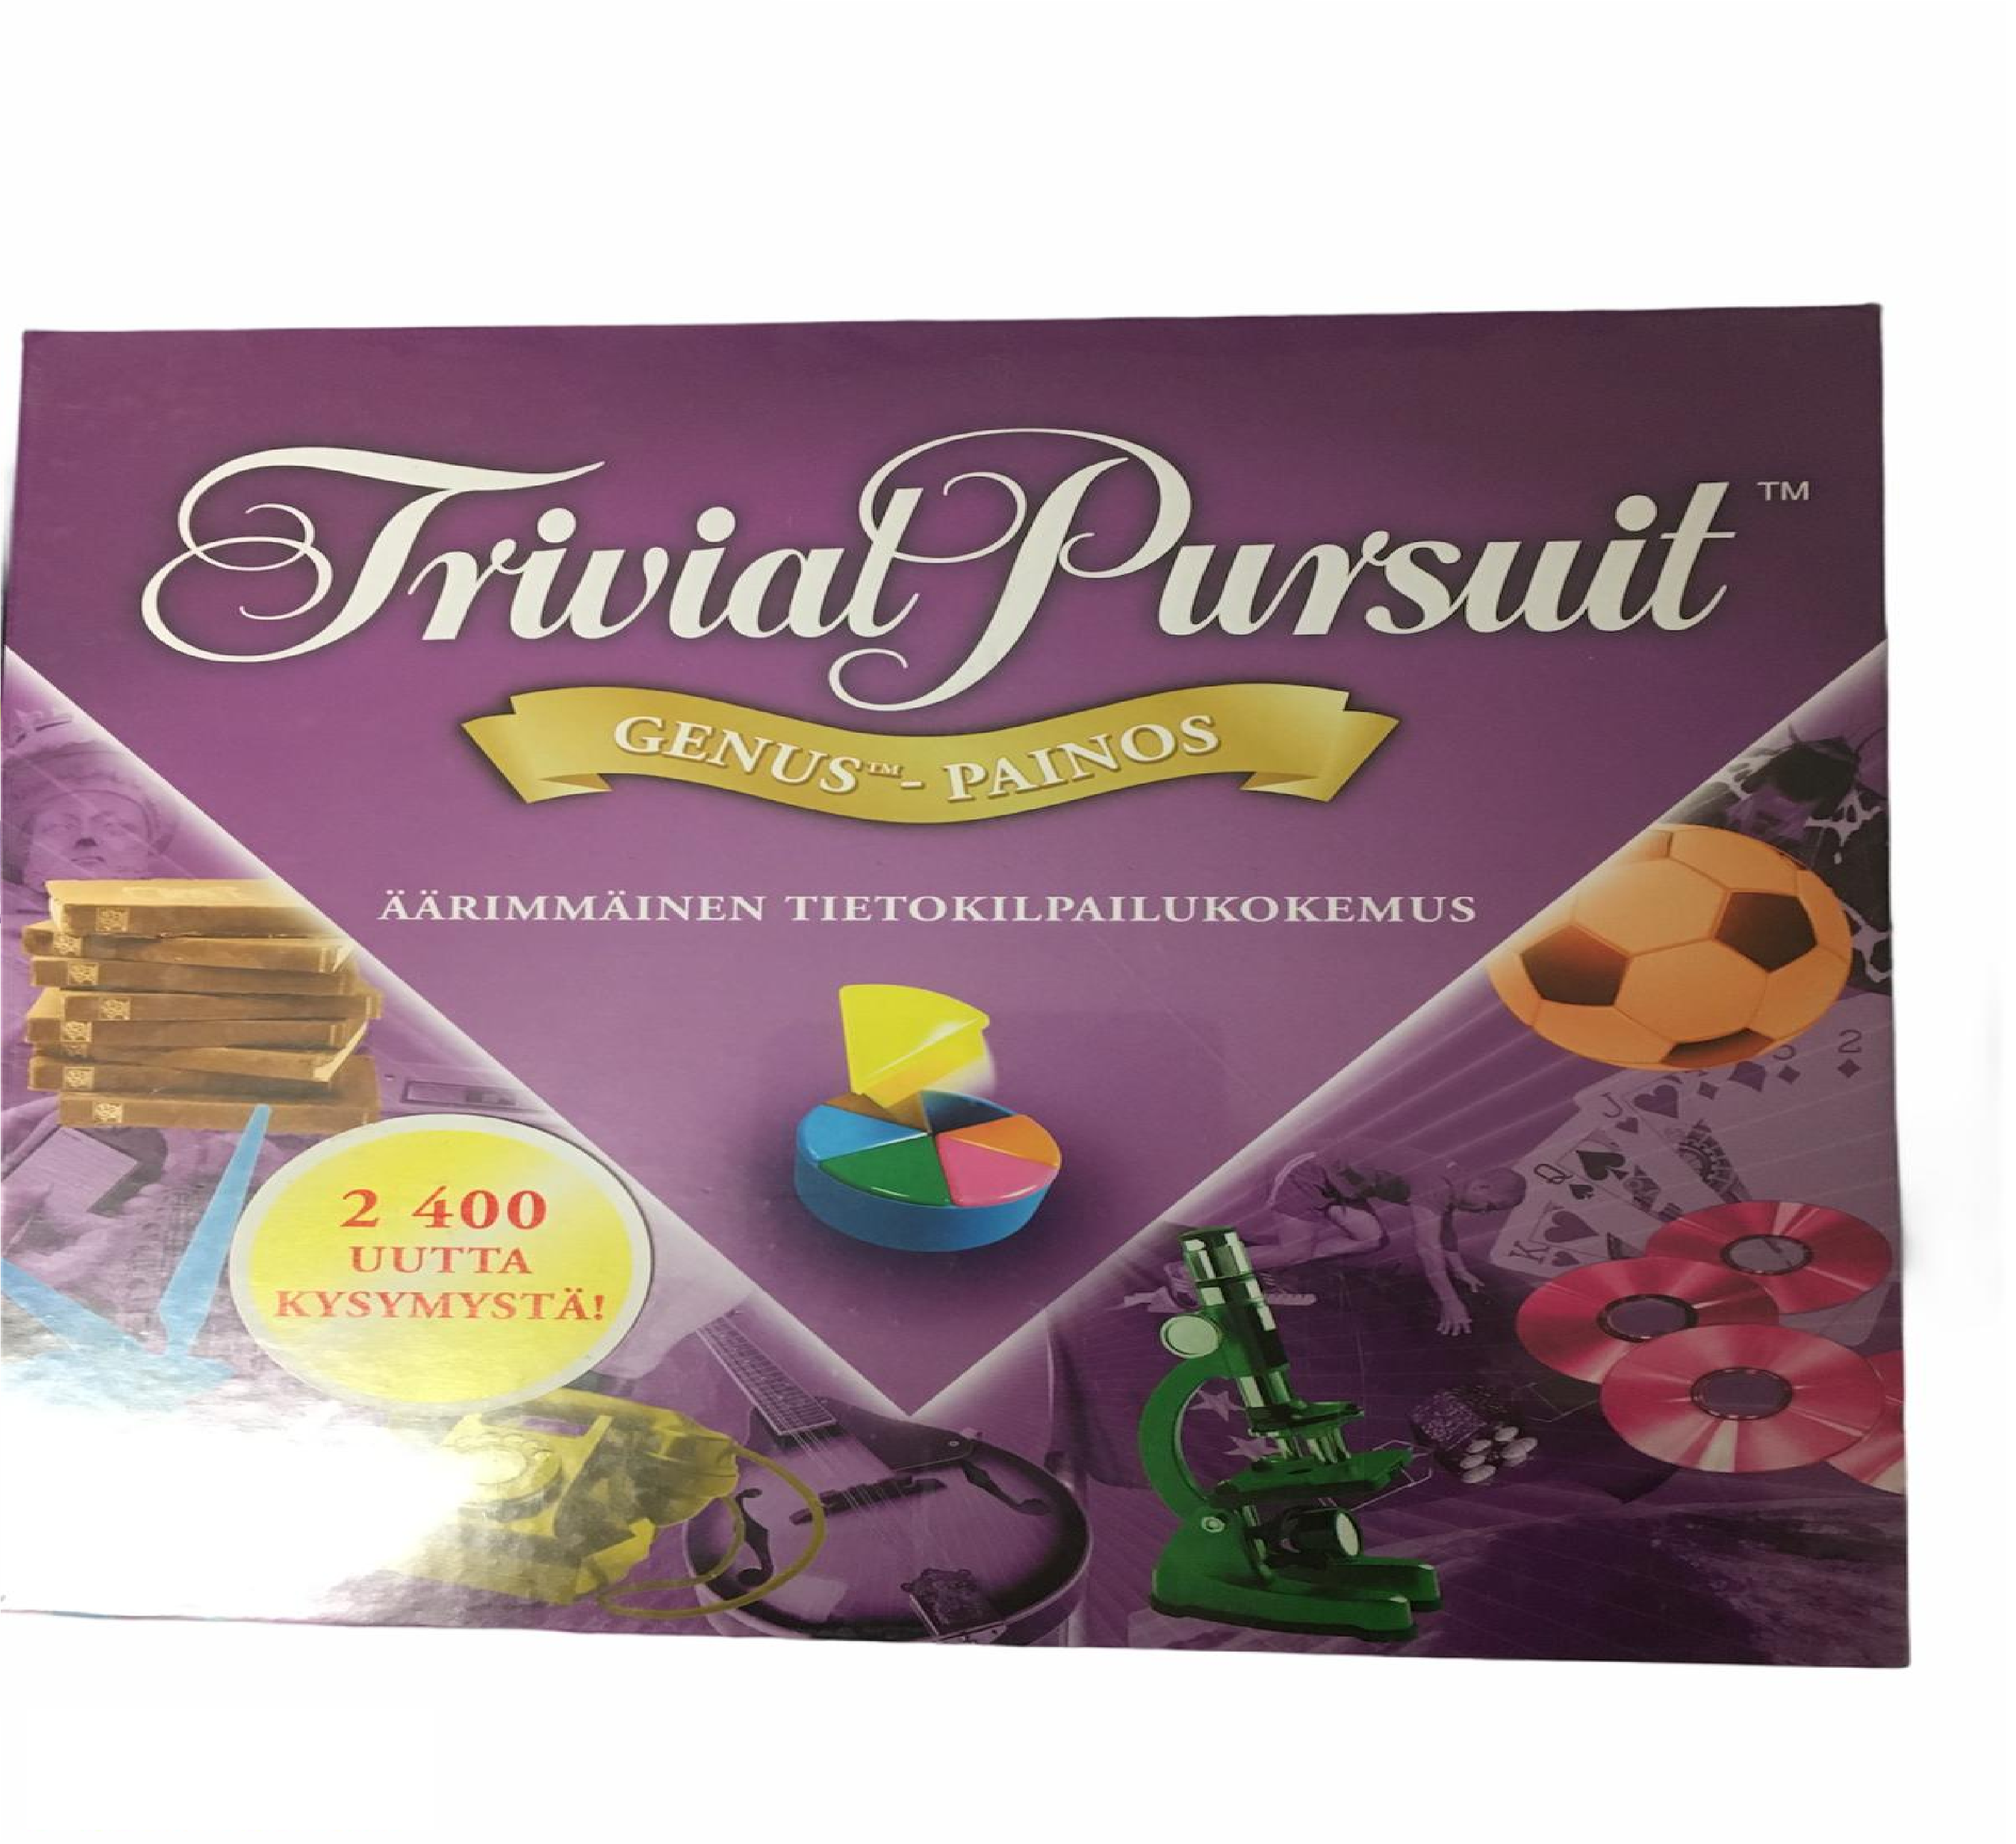 Trivial Pursuit Genus -Painos